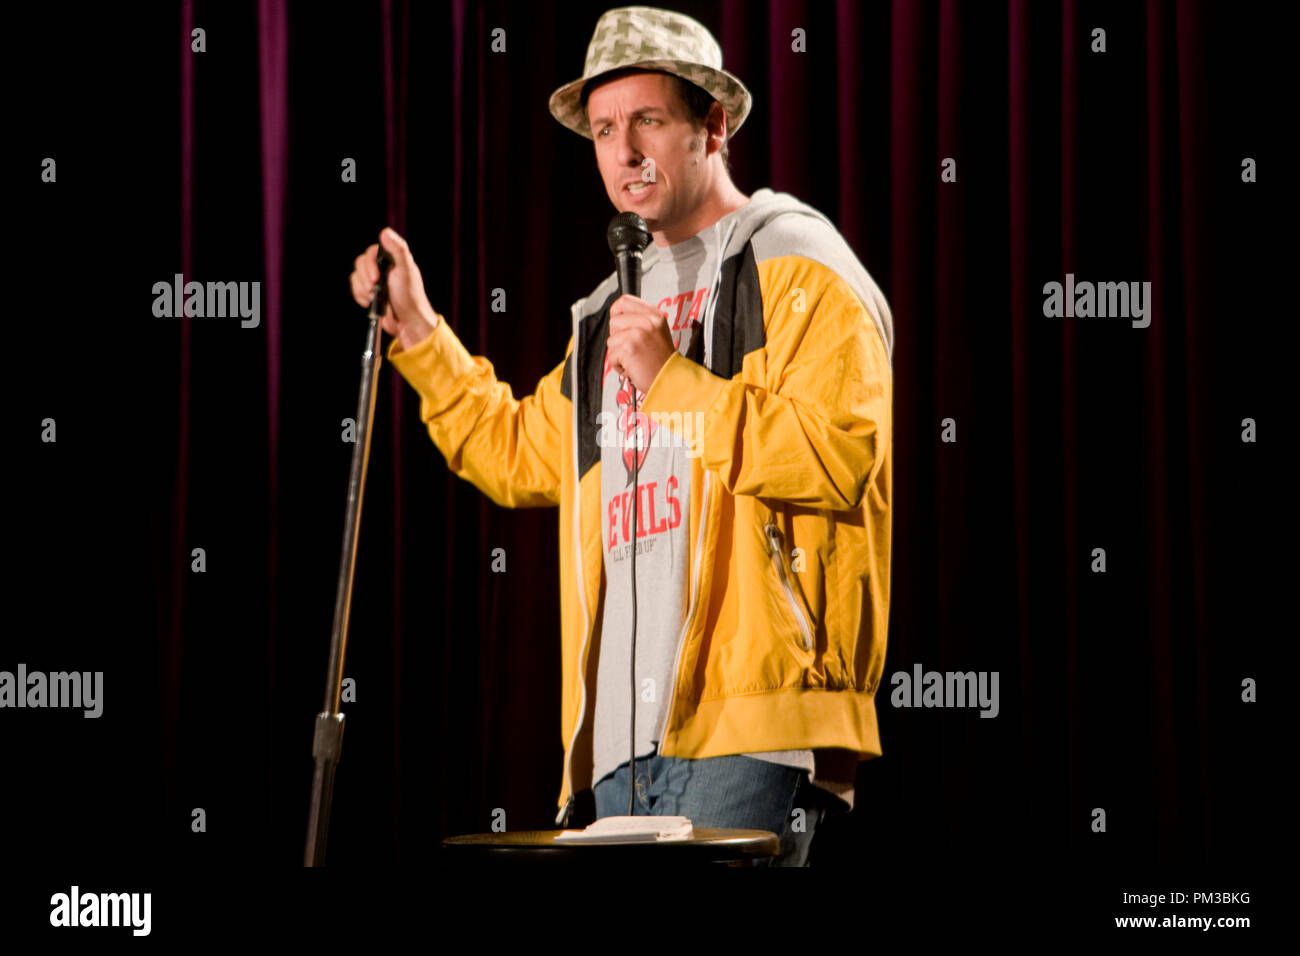 Adam Sandler in Universal Pictures' "Funny People" 2009. Stockfoto